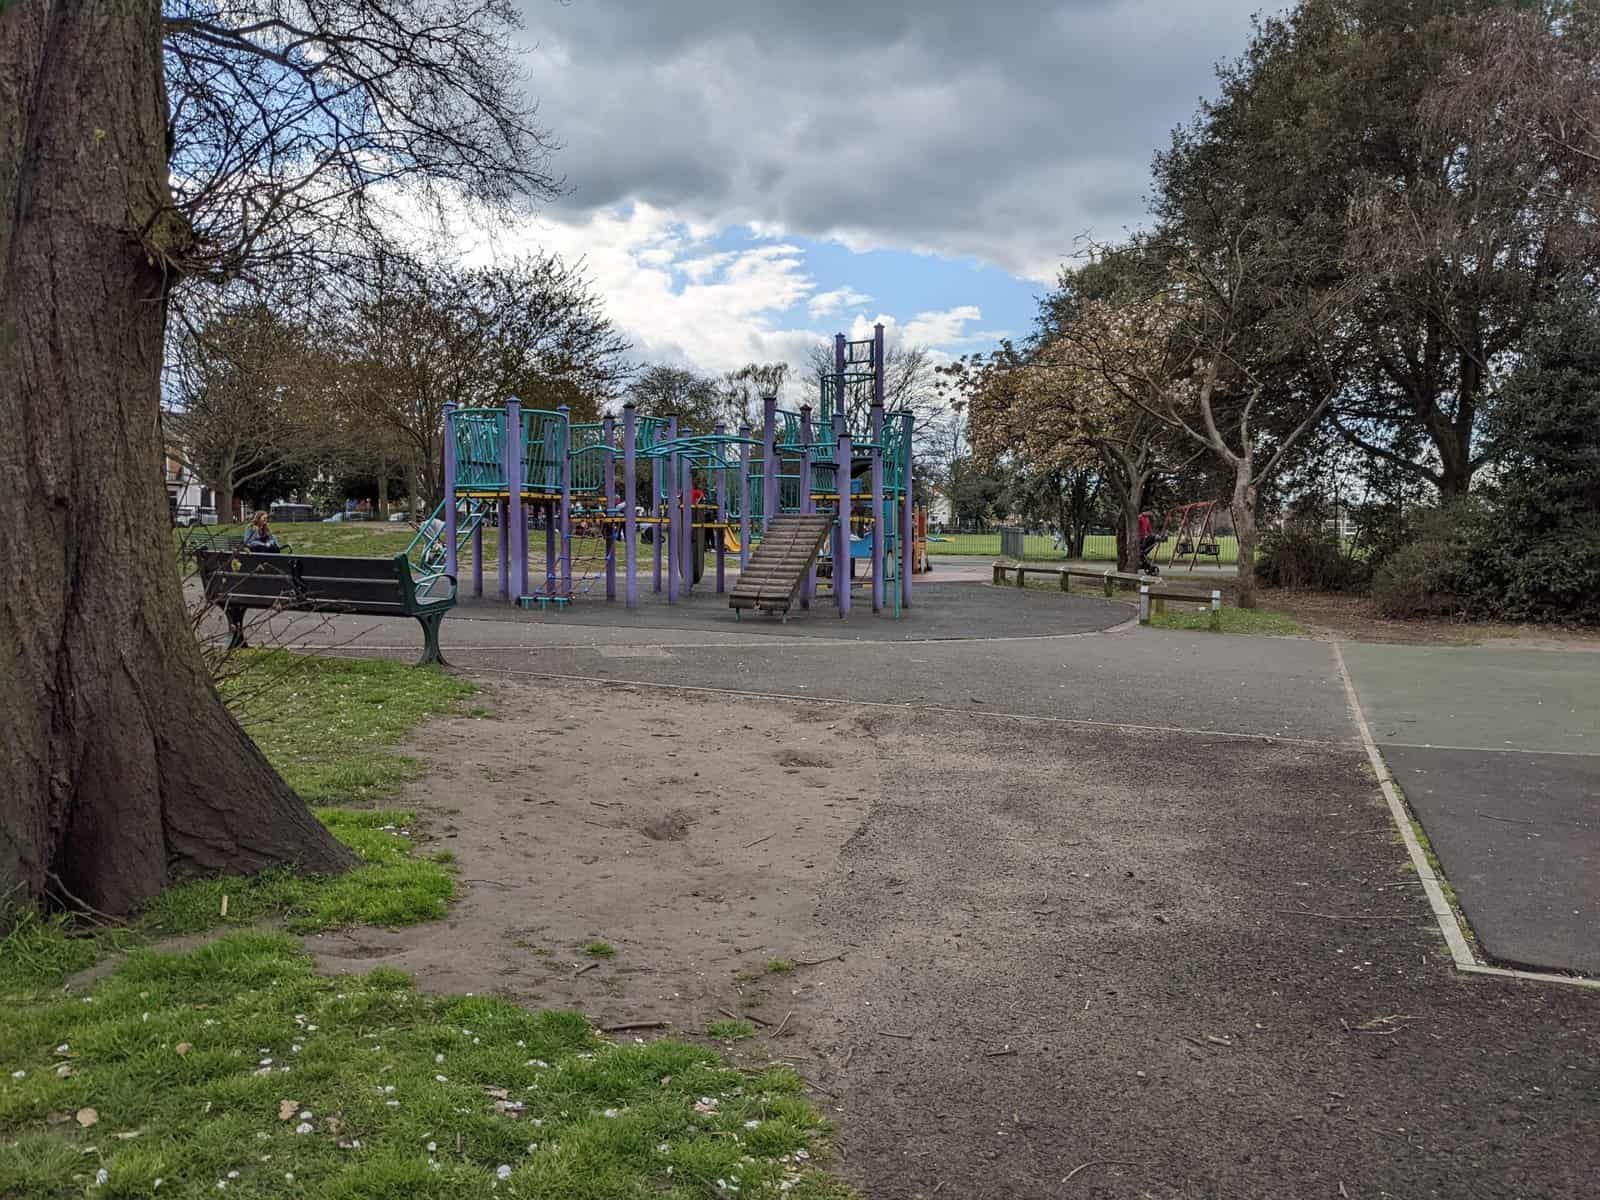 Wandsworth Park Playground